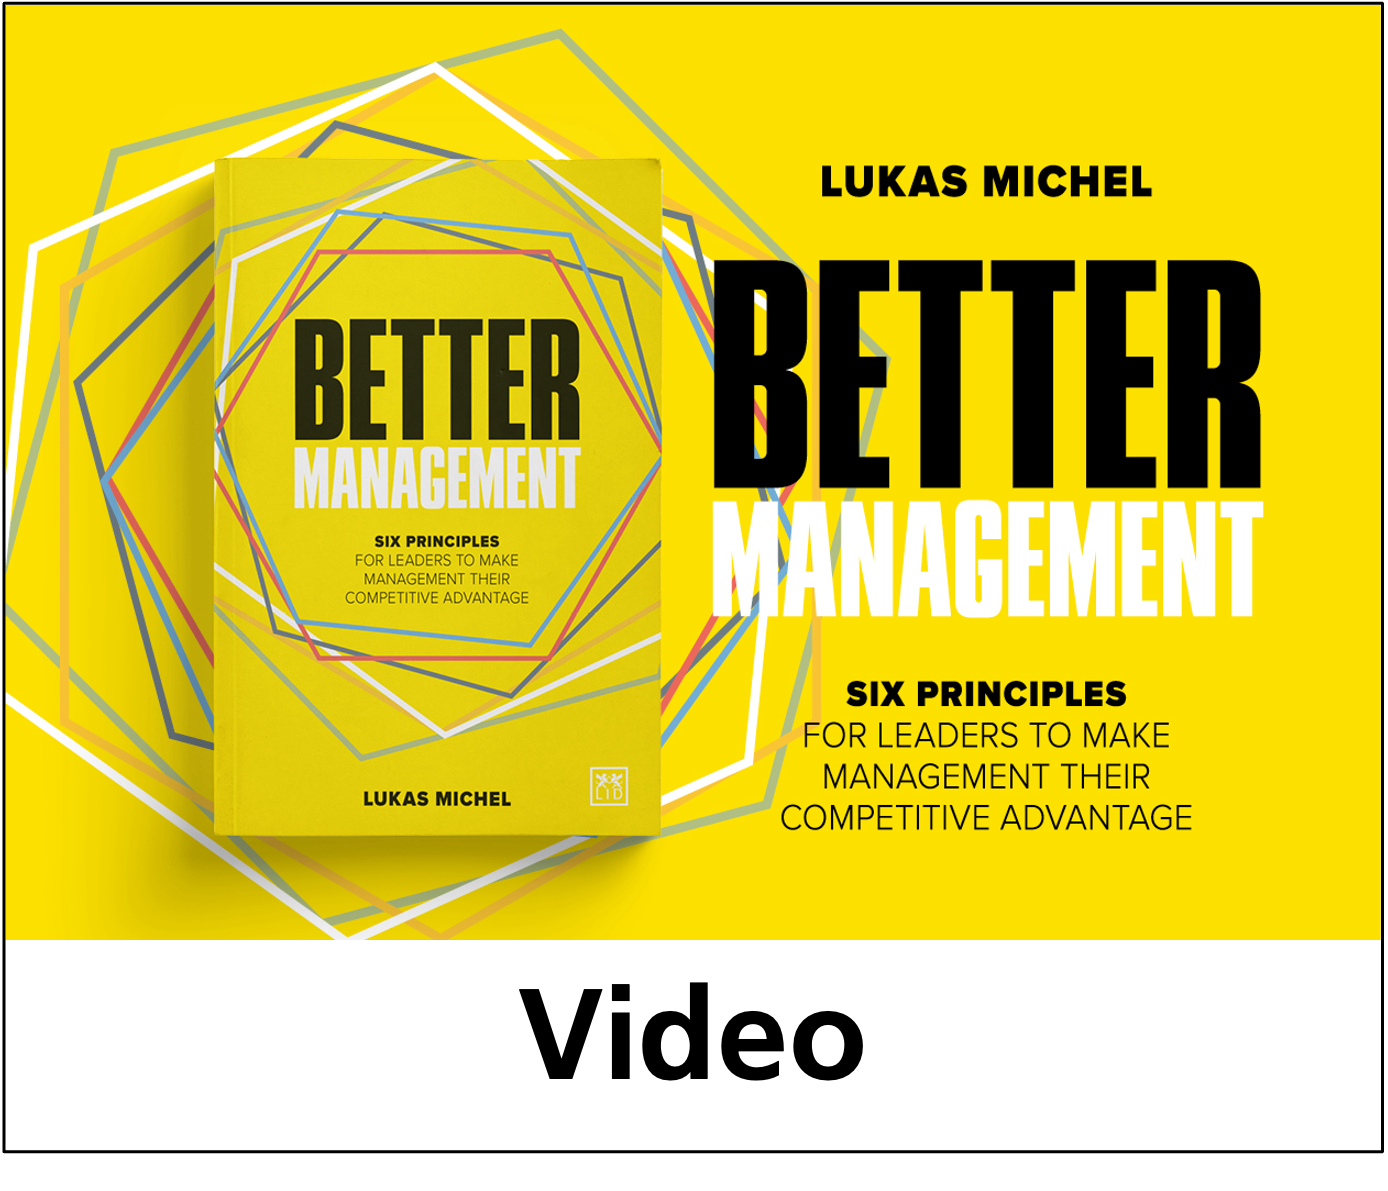 Better Management: An Introduction